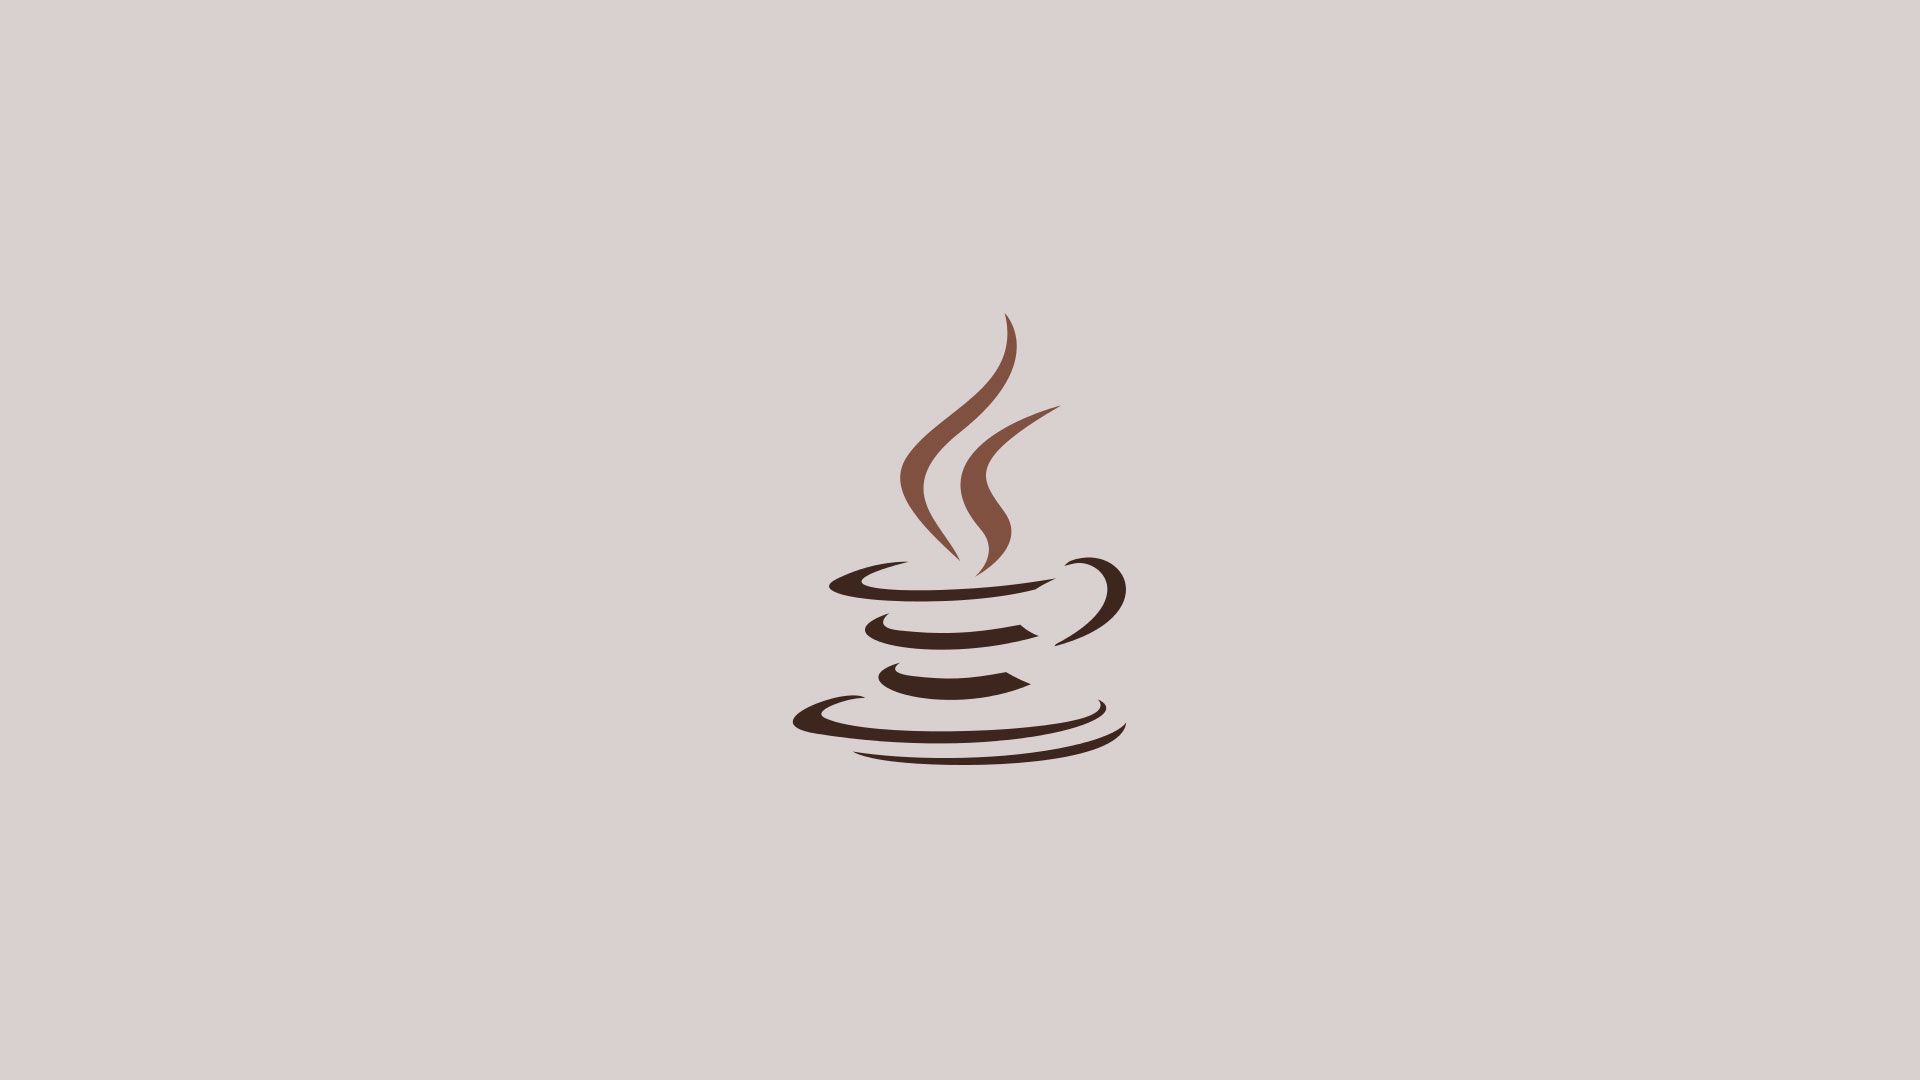 java programming wallpaper, logo, soft serve ice creams, graphics, liquid